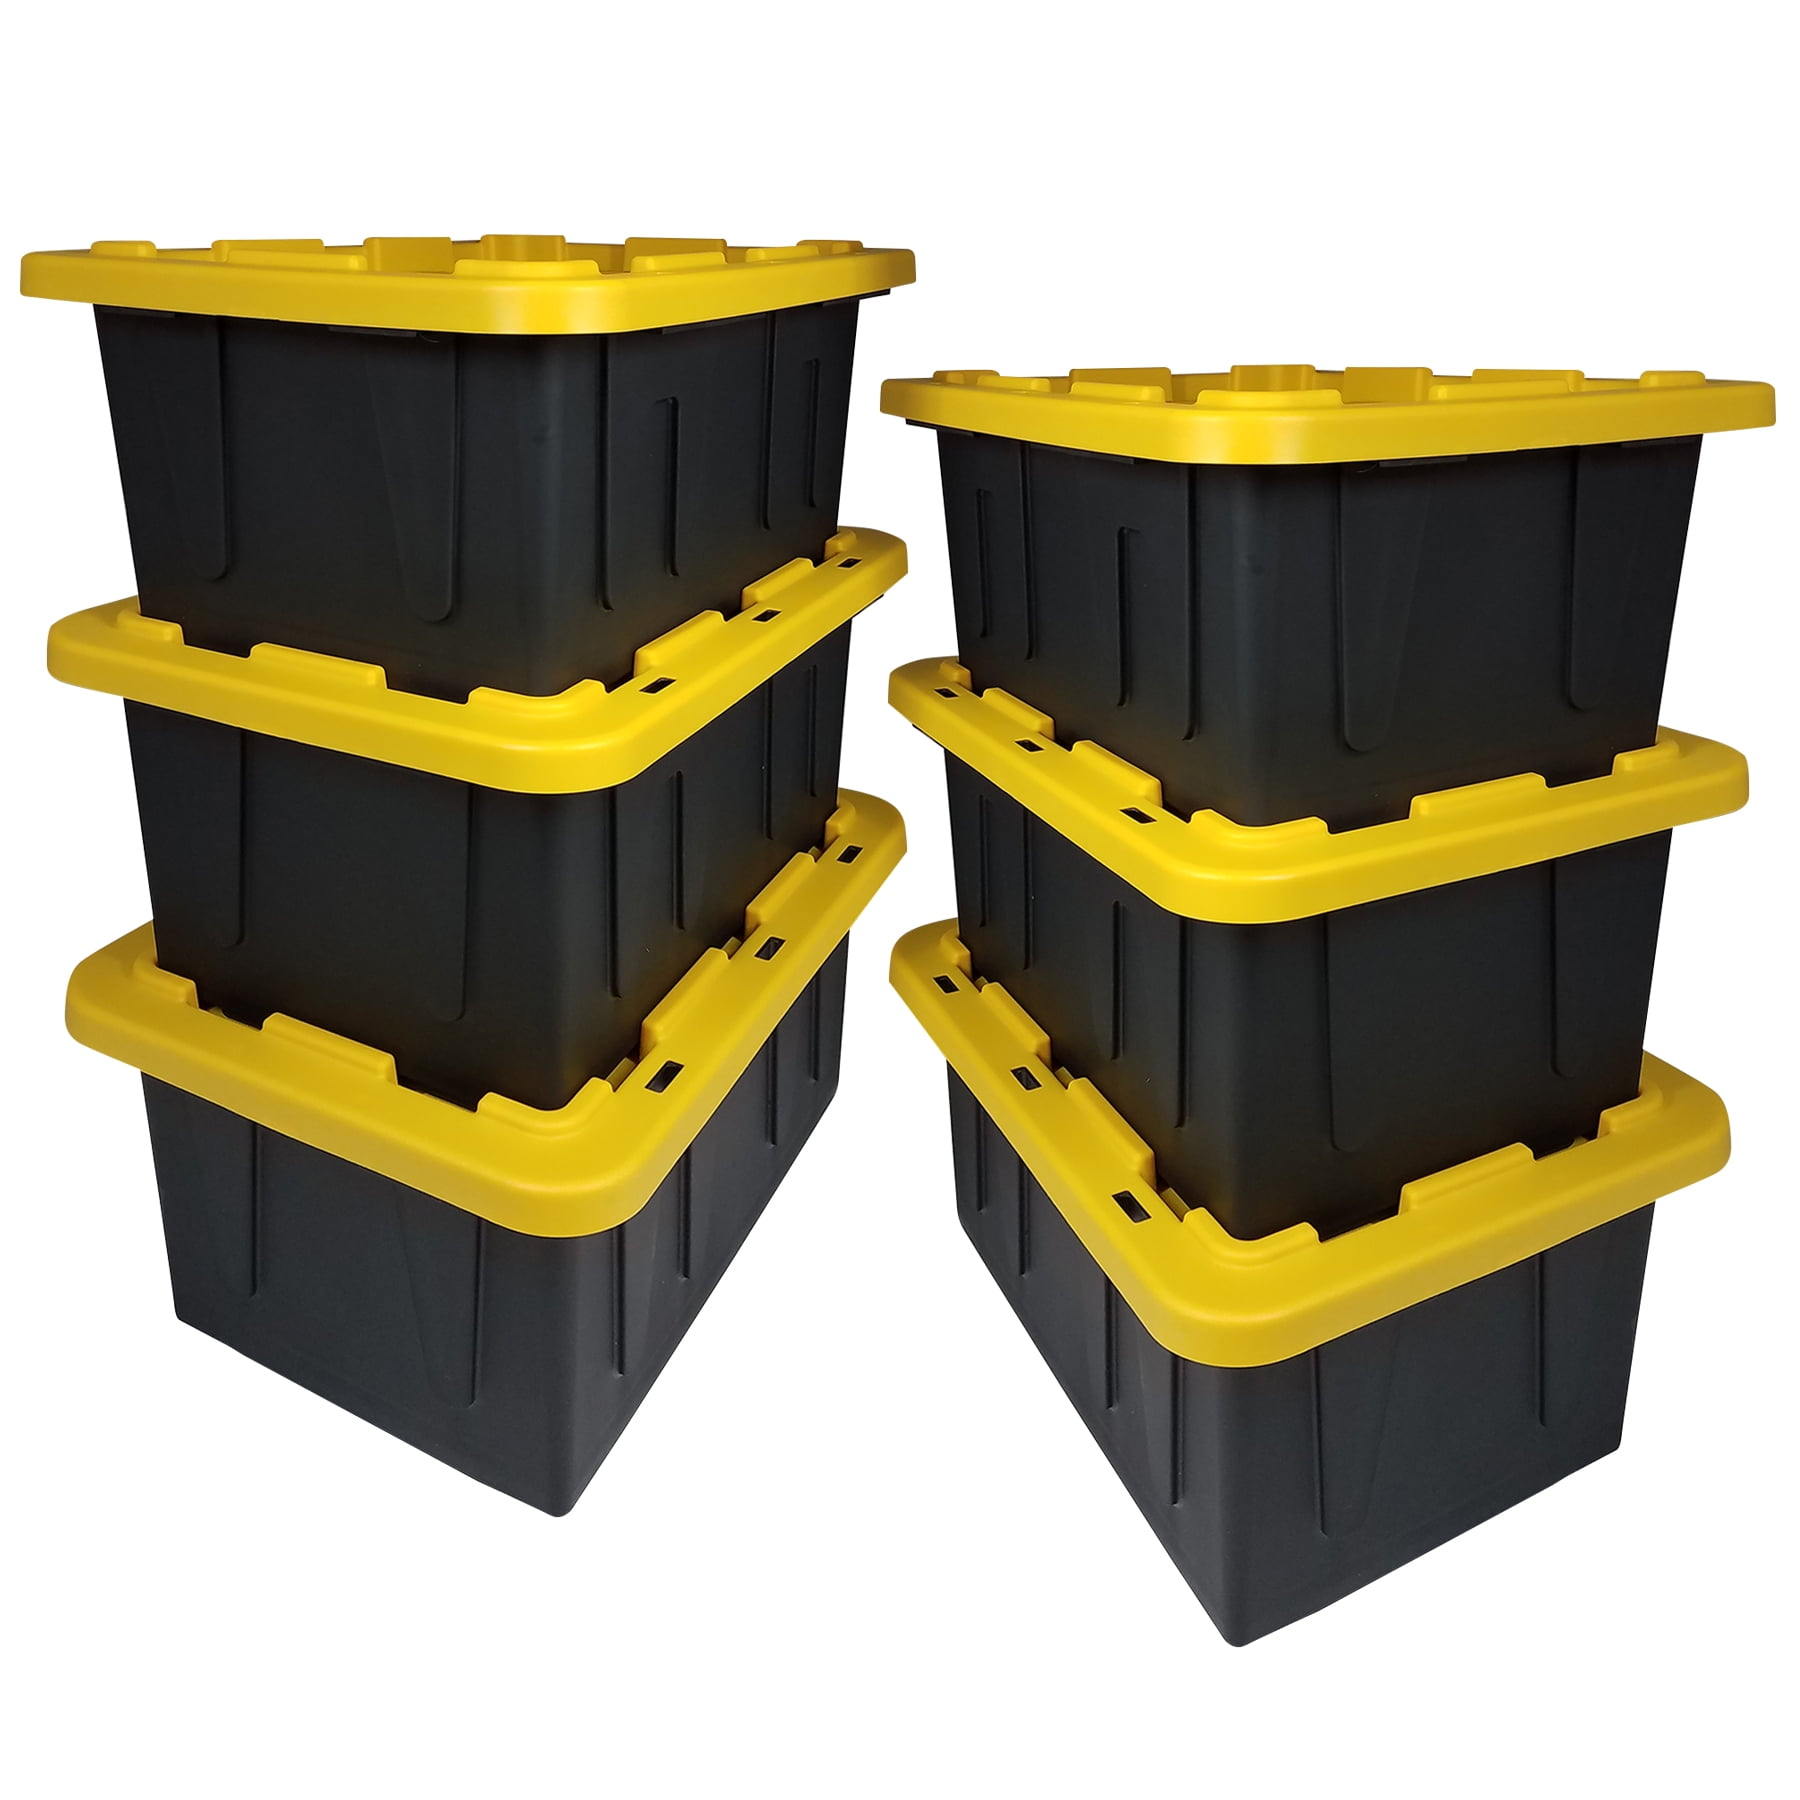 HOMZ 15 Gallon Durabilt Storage Bins, Pack of 2 Heavy Duty Plastic